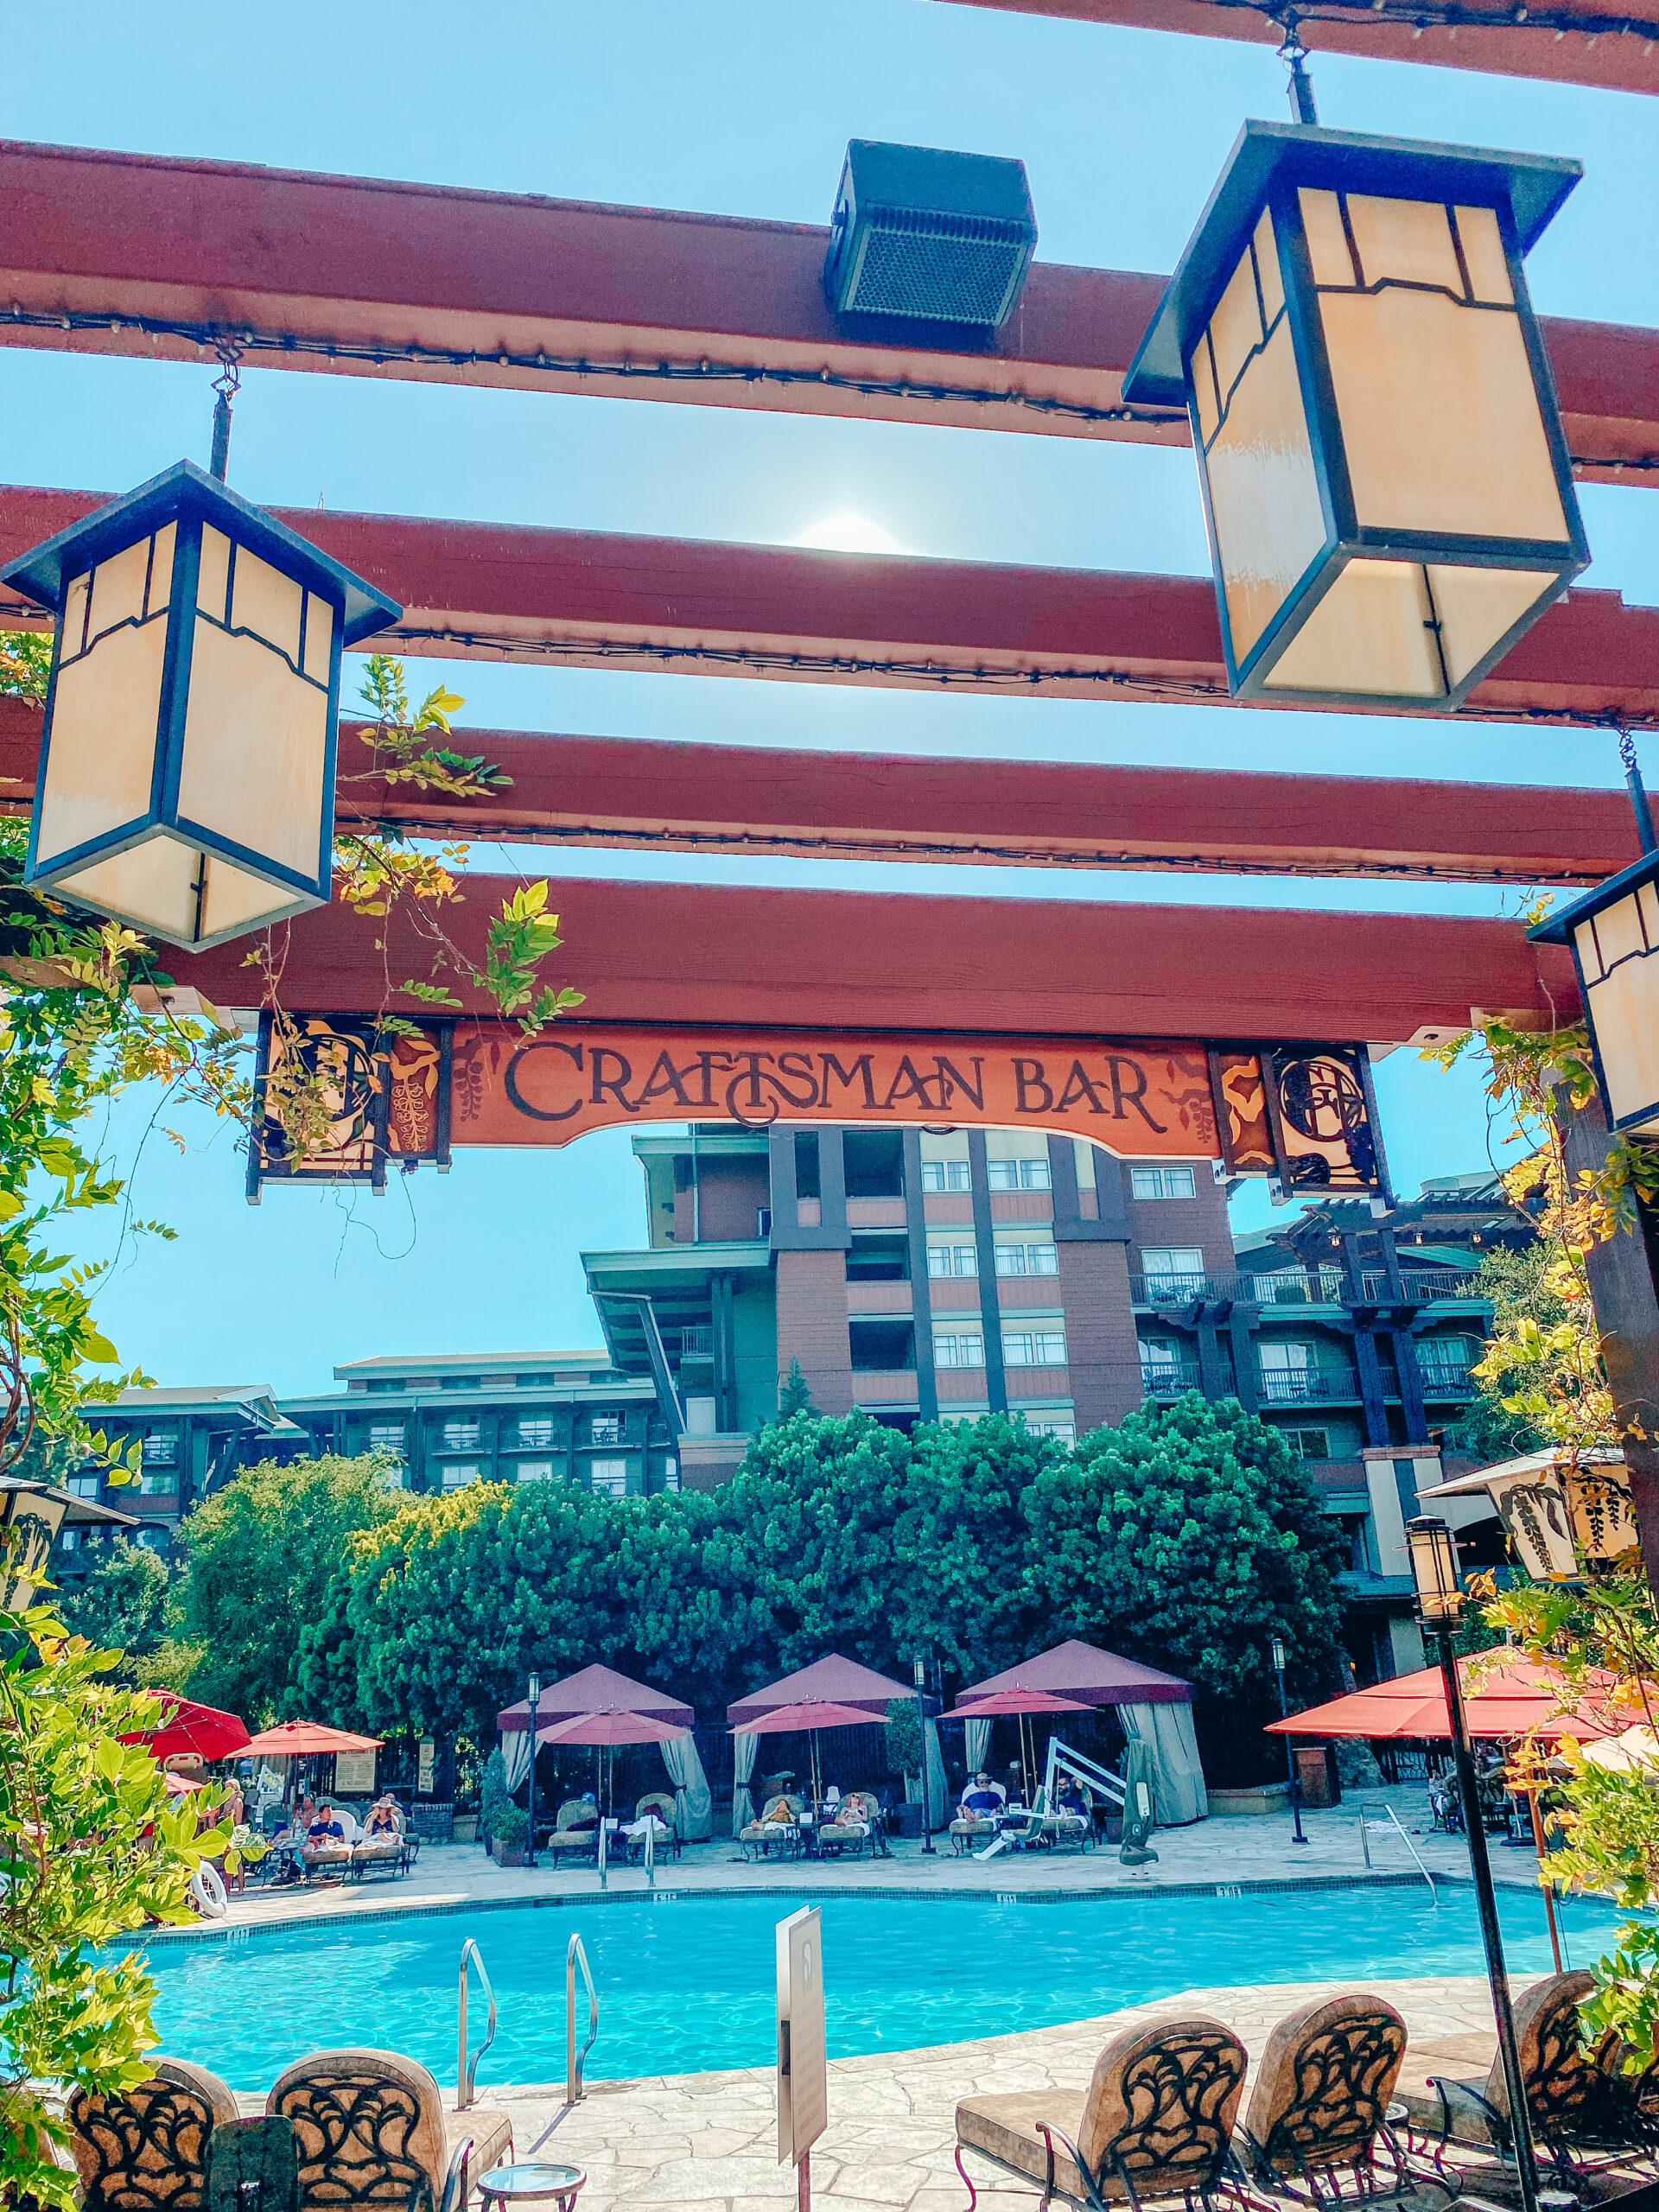 GCH Craftsman Bar views at Disney's Grand Californian